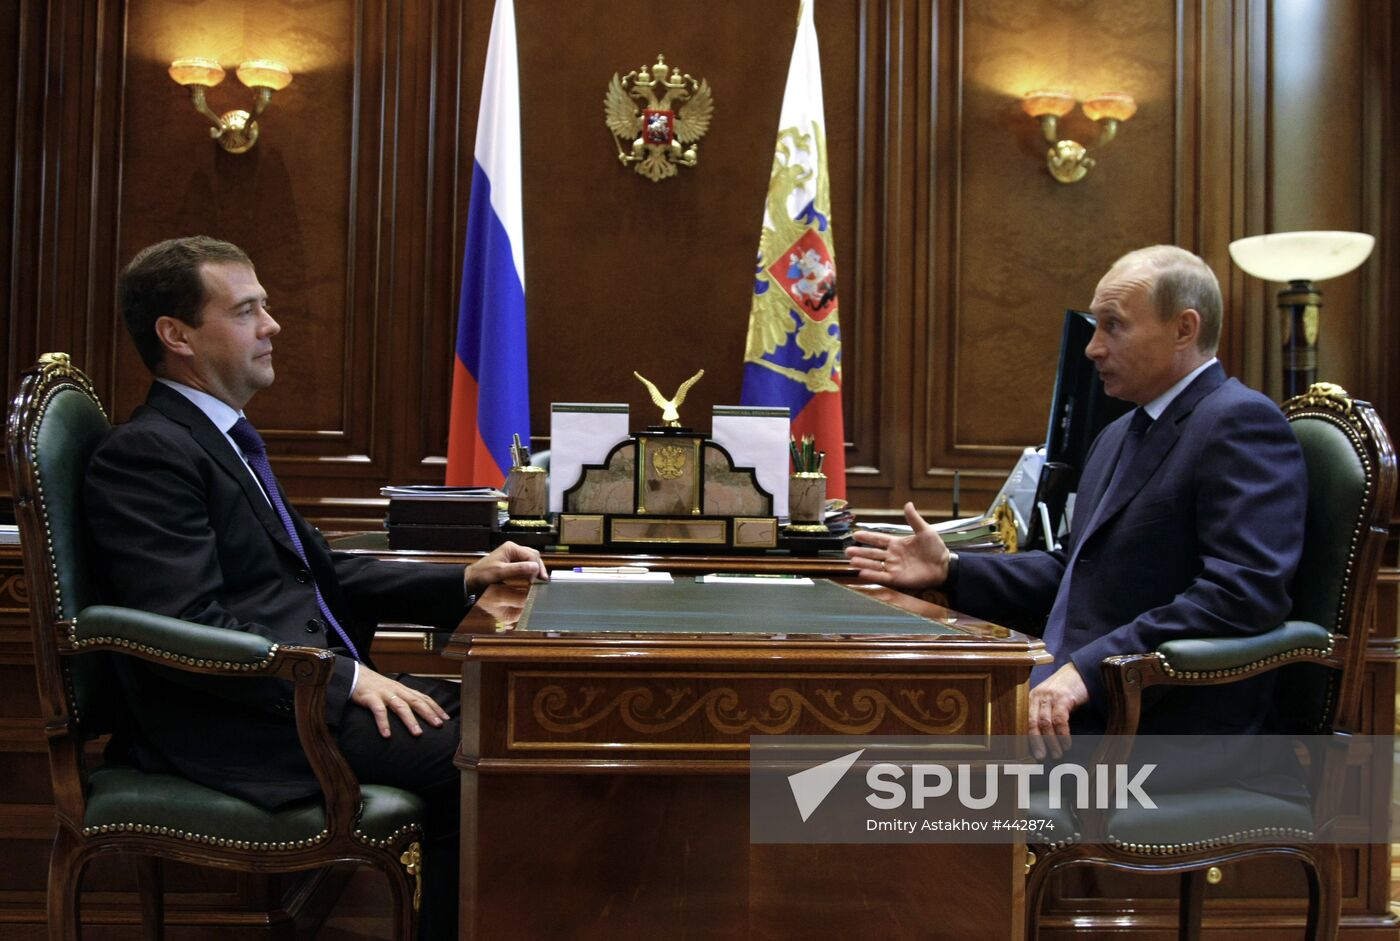 Dmitry Medvedev meeting with Vladimir Putin